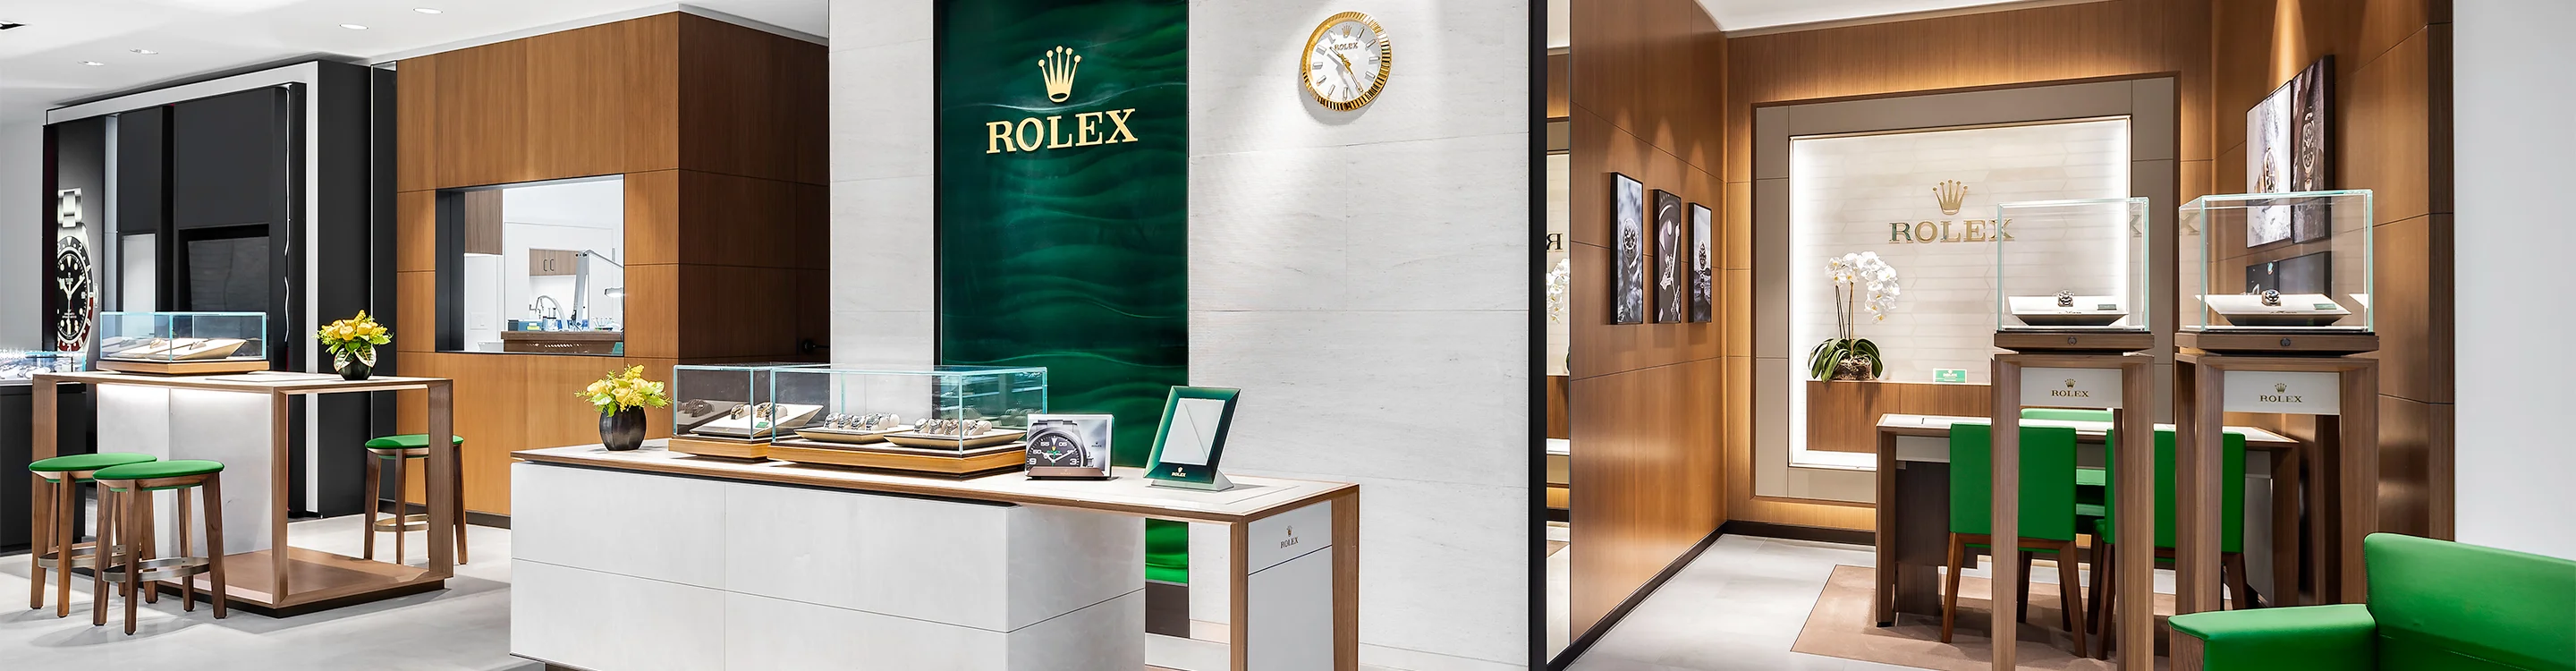 Rolex at Floyd & Green Fine Jewelers